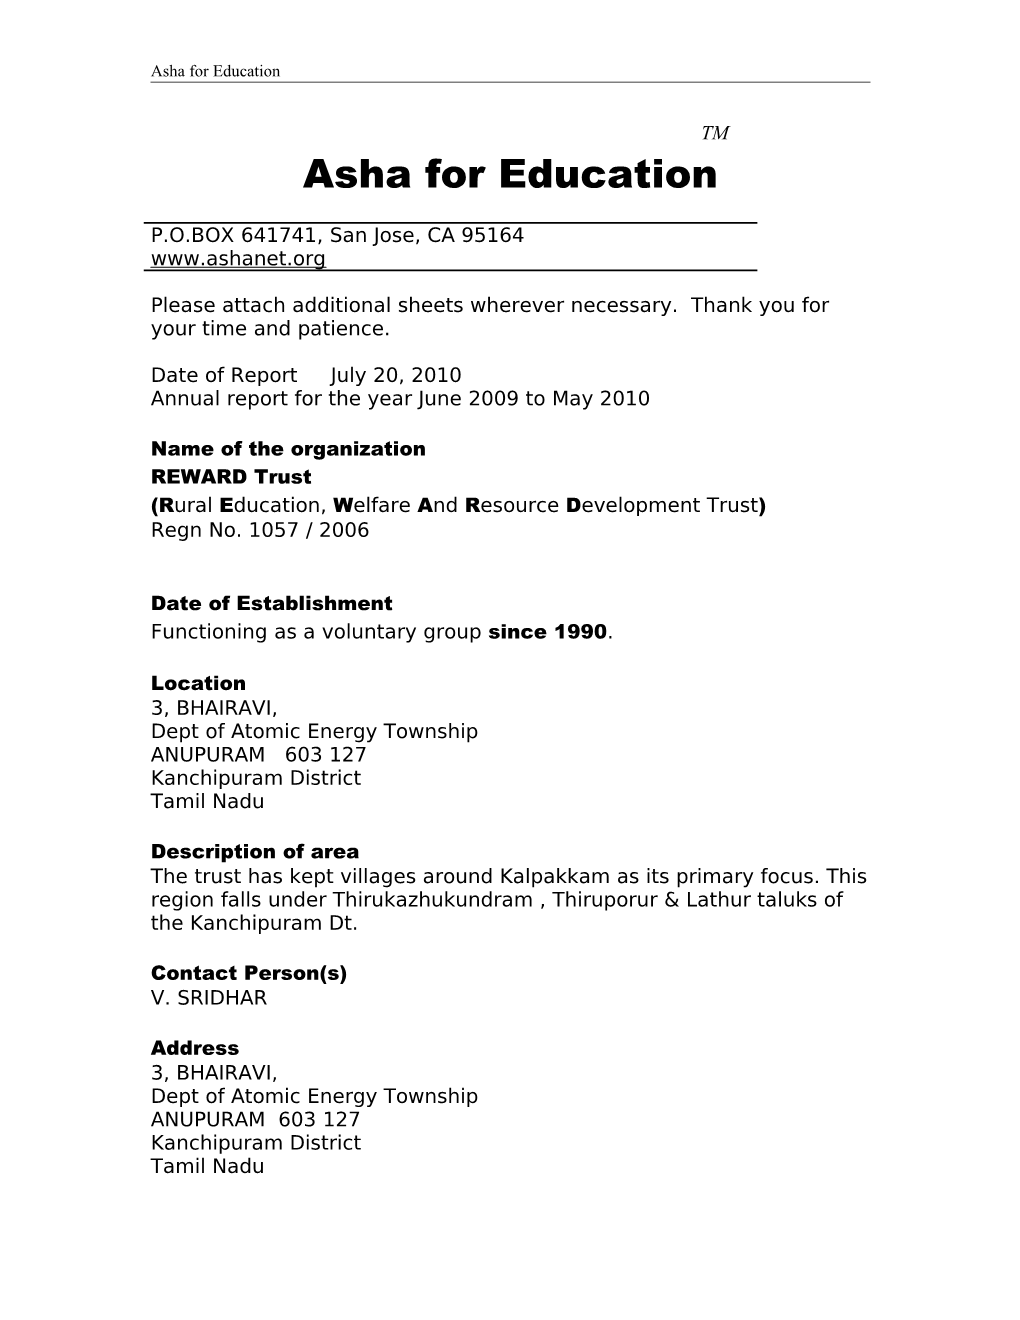 Asha for Education s1